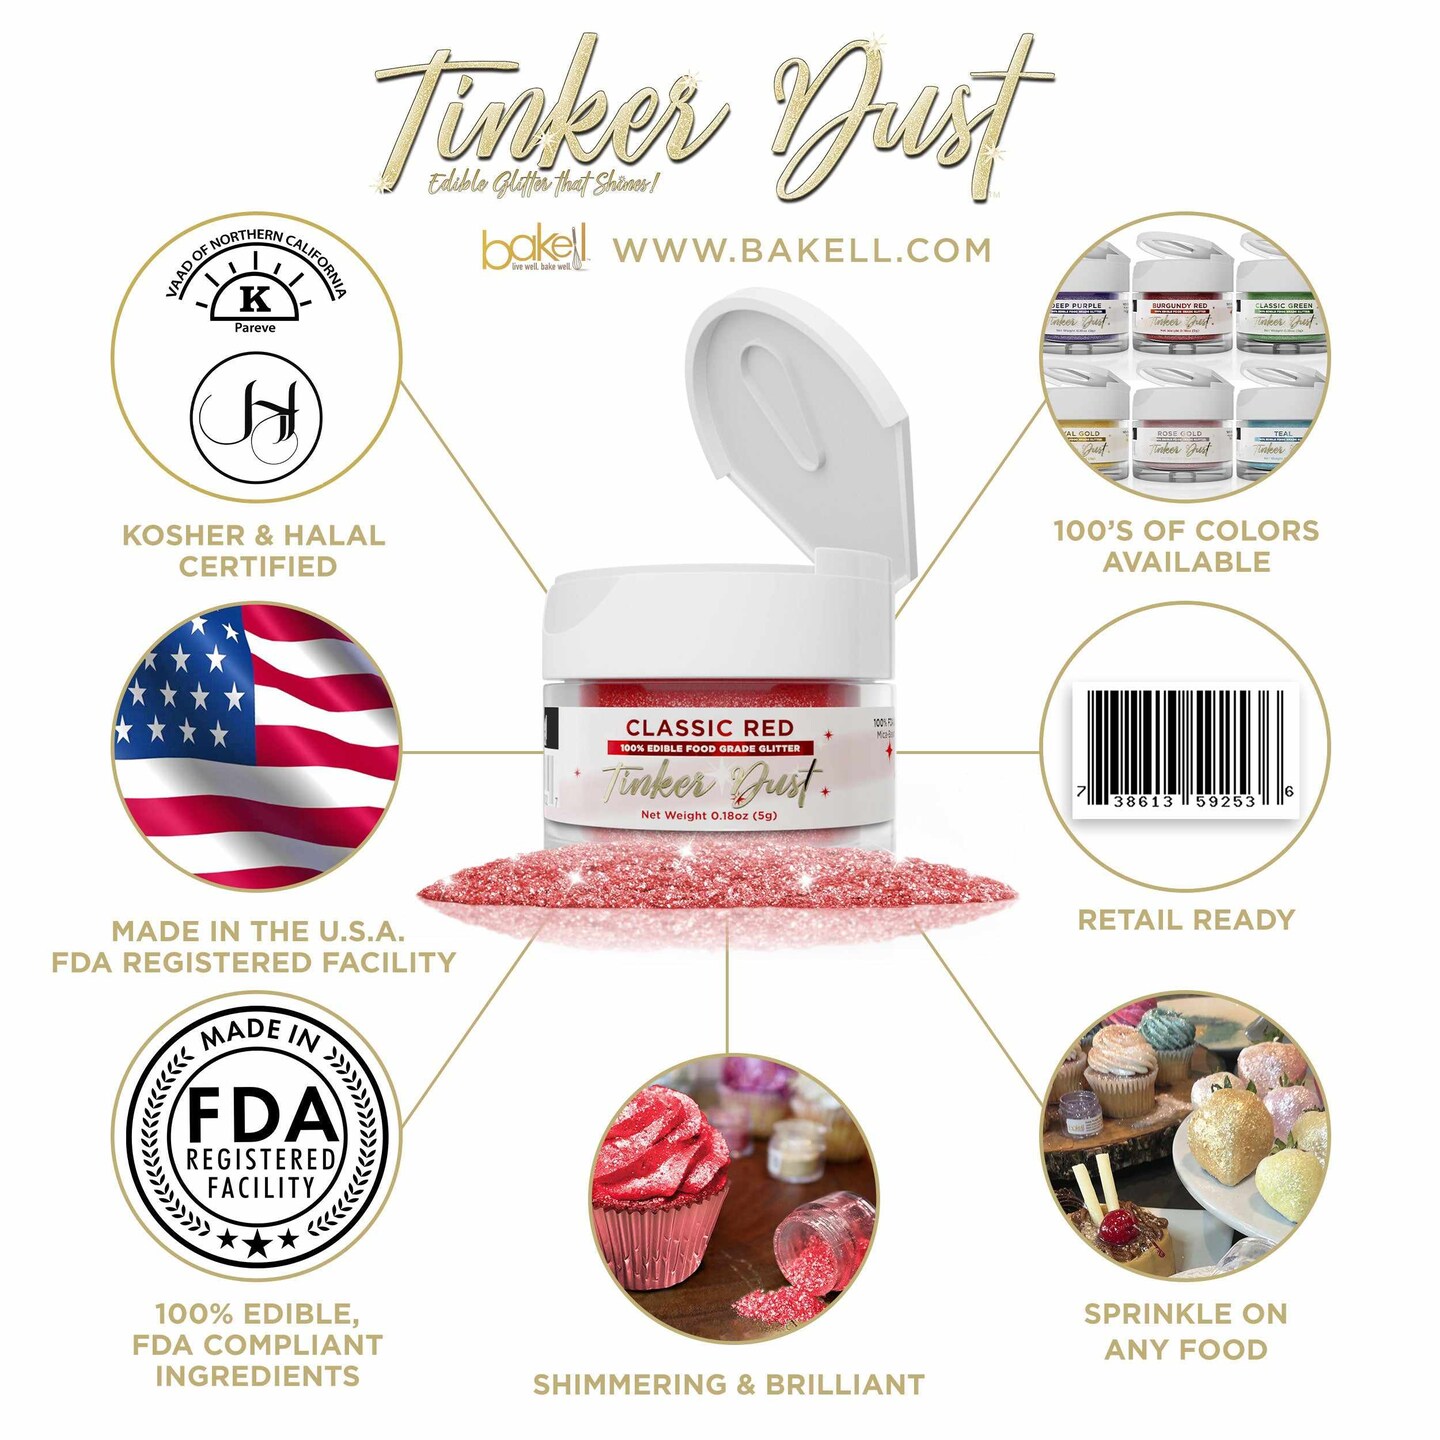 Classic Red Edible Glitter | Tinker Dust&#xAE; 5 Grams